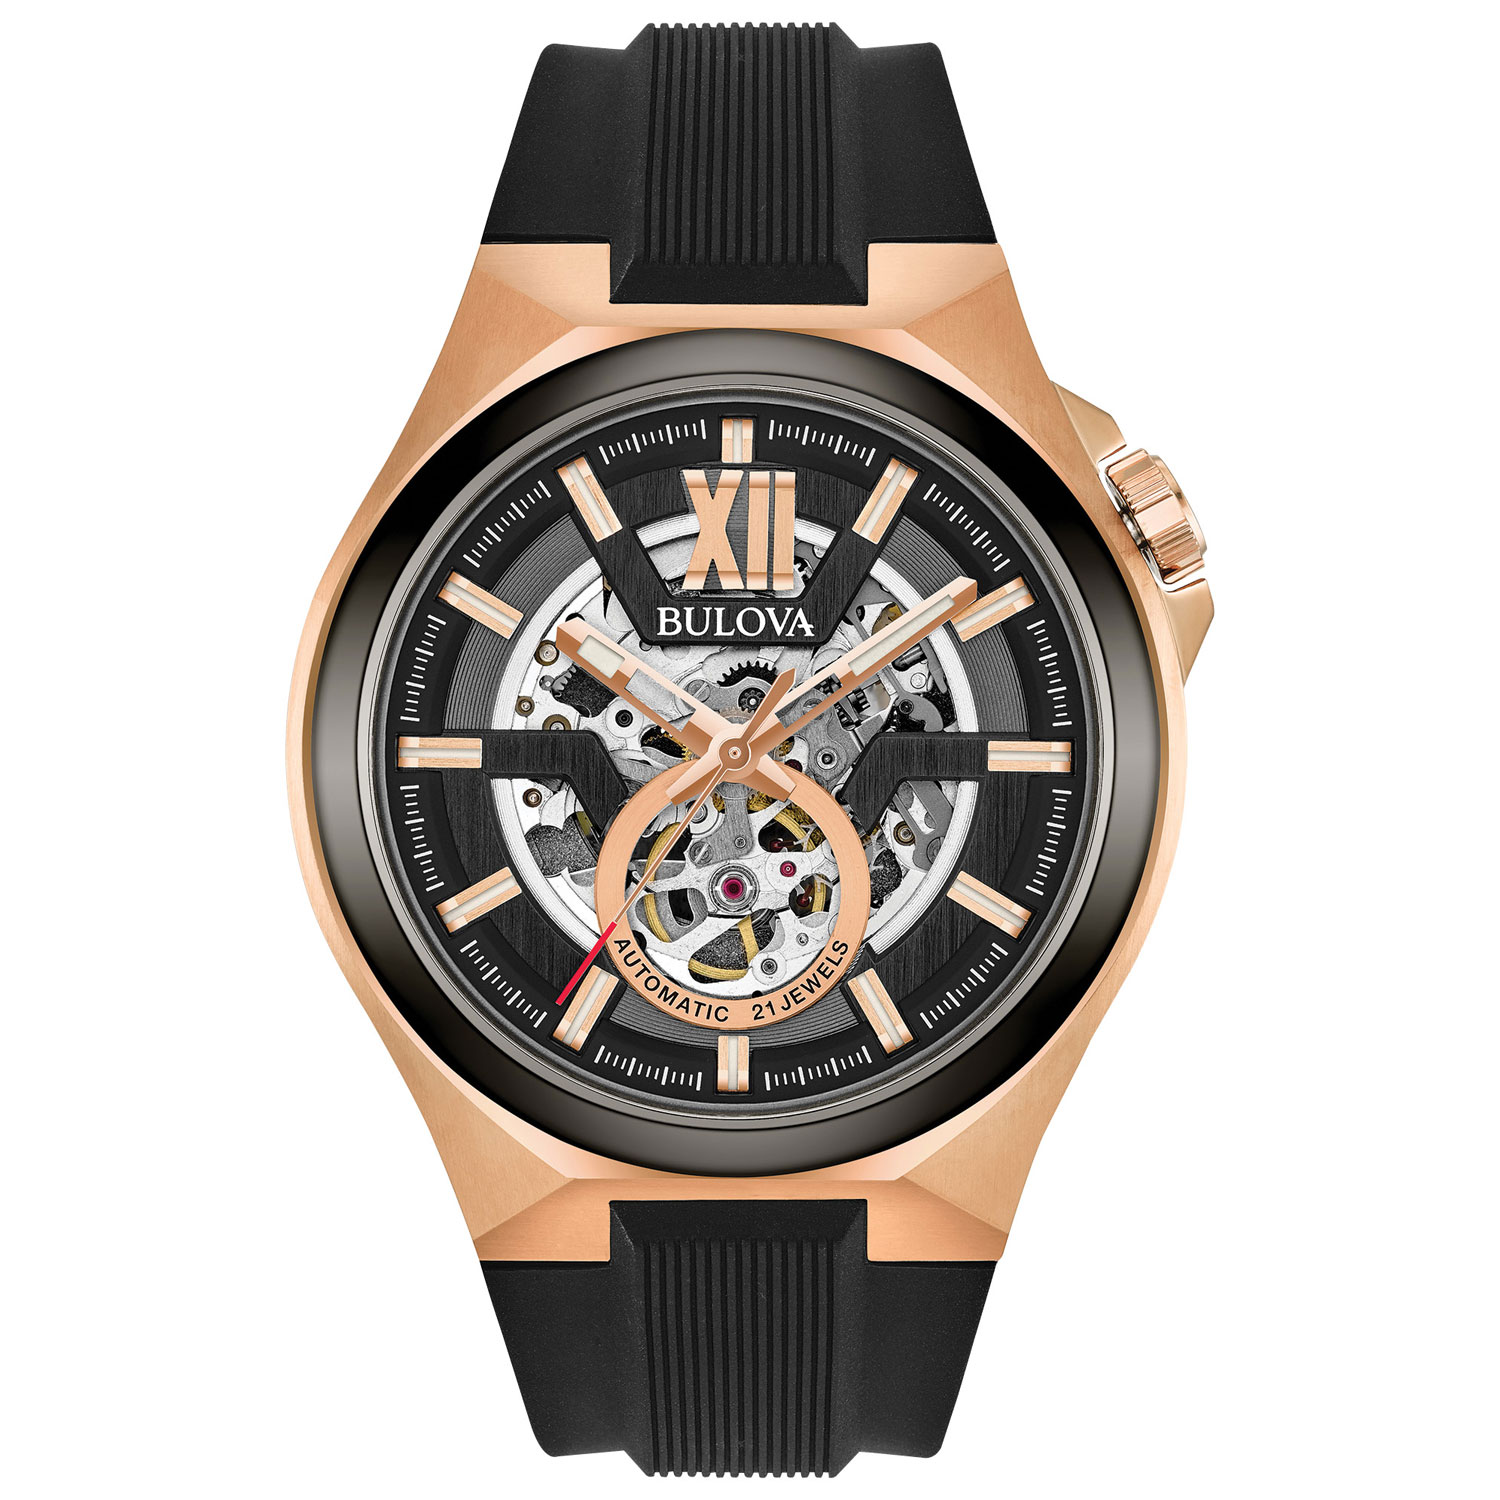 Bulova Maquina Automatic Watch 46mm Men's Watch - Rose Gold-Tone Case, Black Silicone Strap & Black Dial